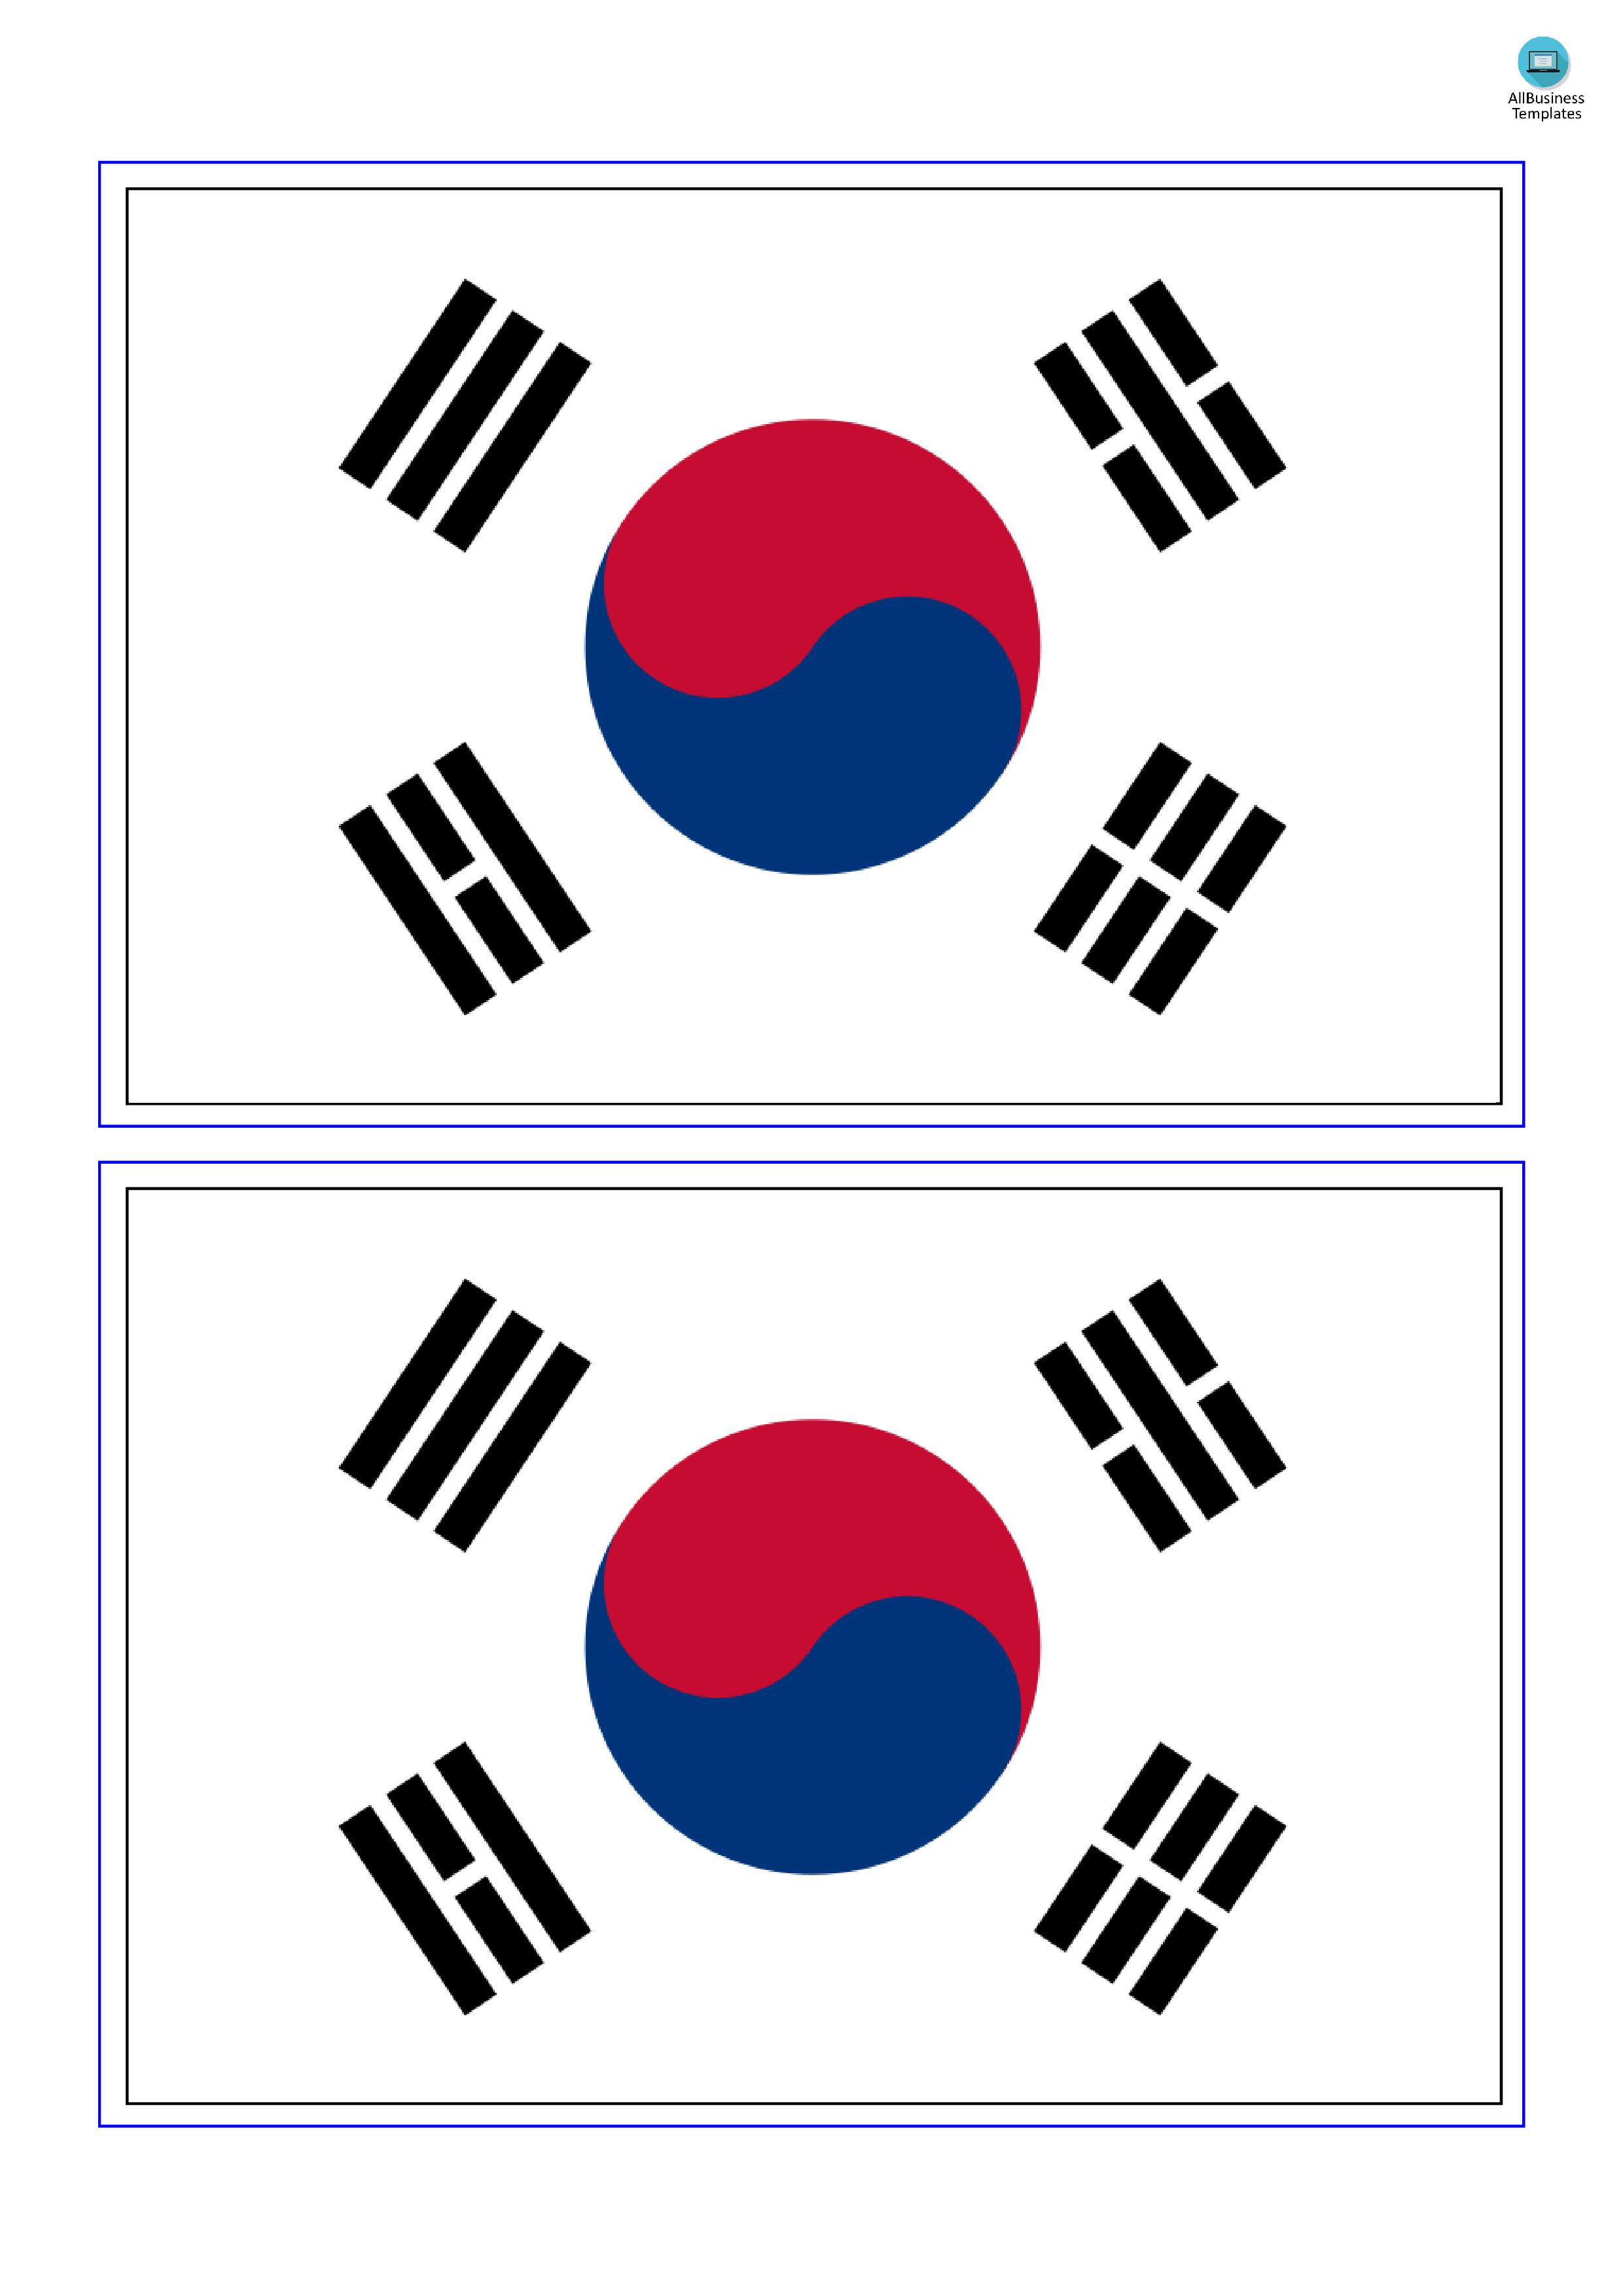 south korea flag plantilla imagen principal